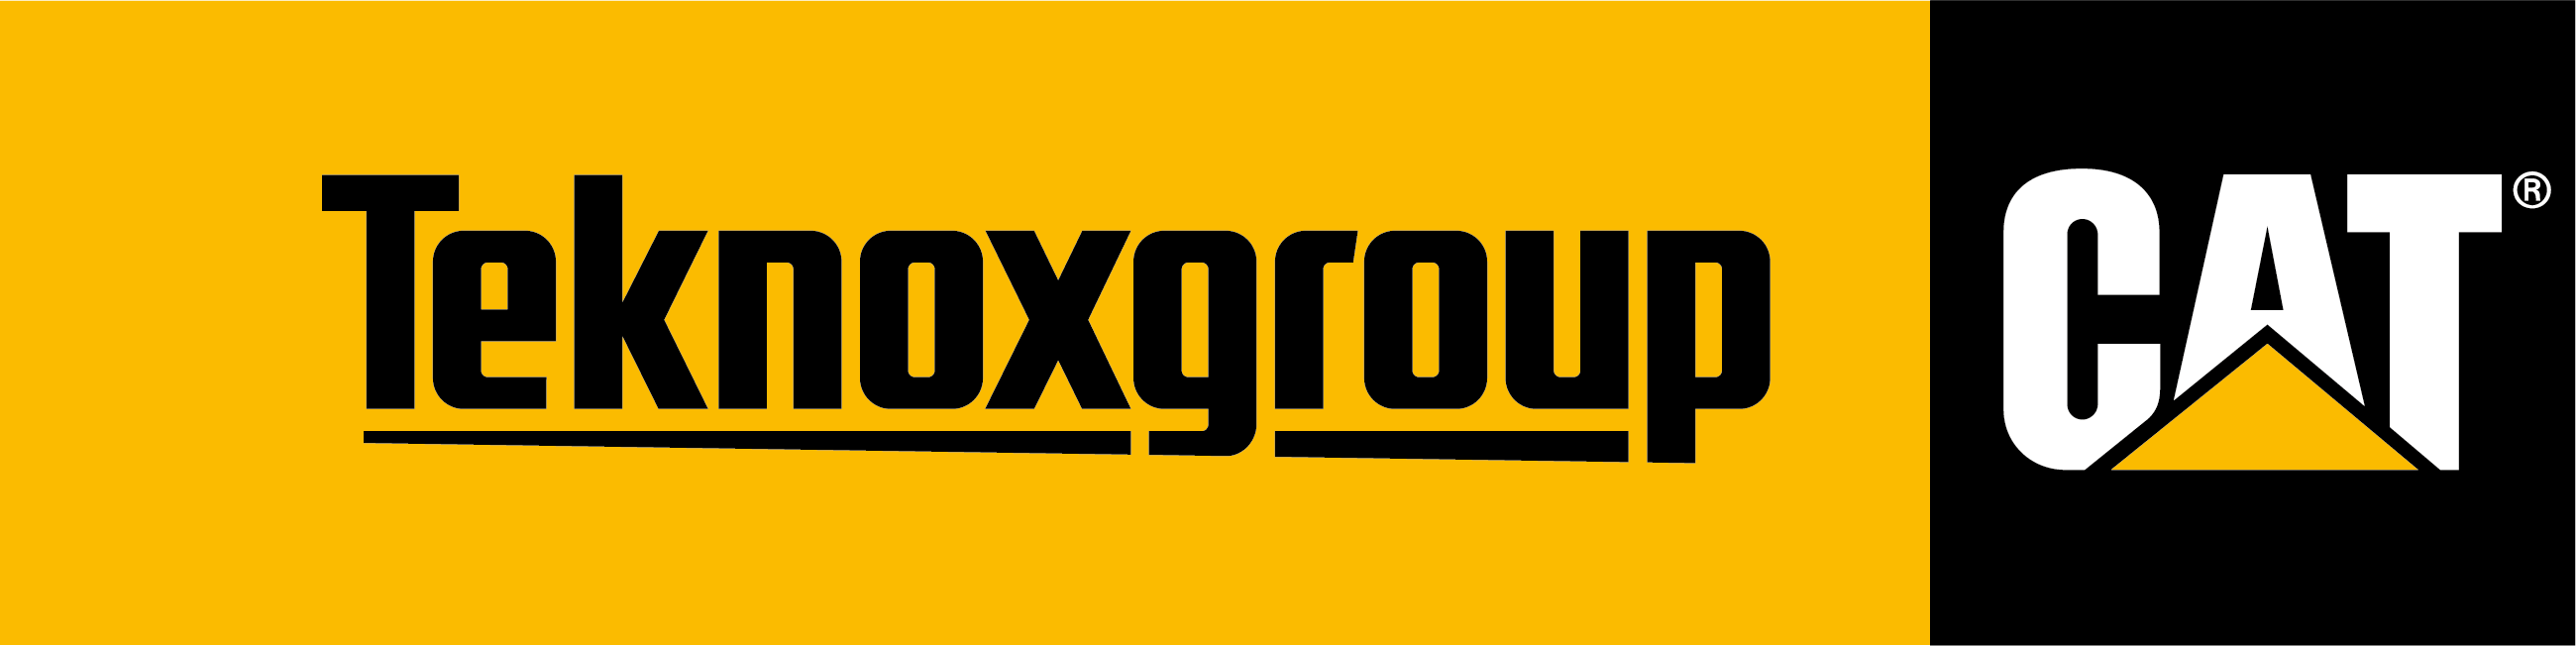 Tecnoxgroup CAT